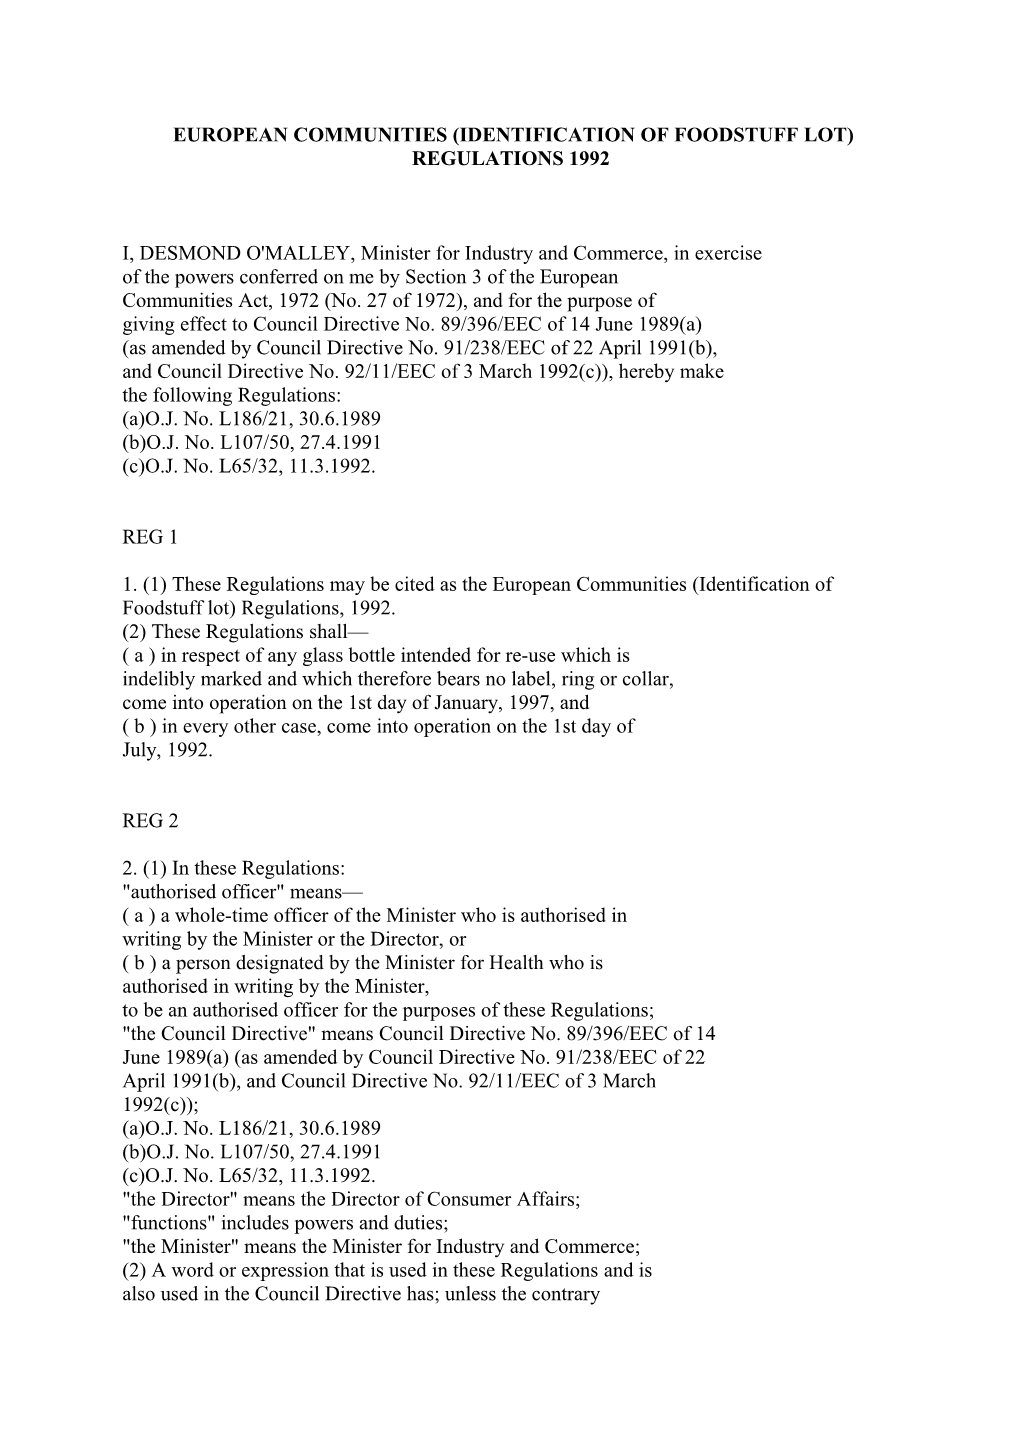 European Communities (Identification of Foodstuff Lot) Regulations 1992